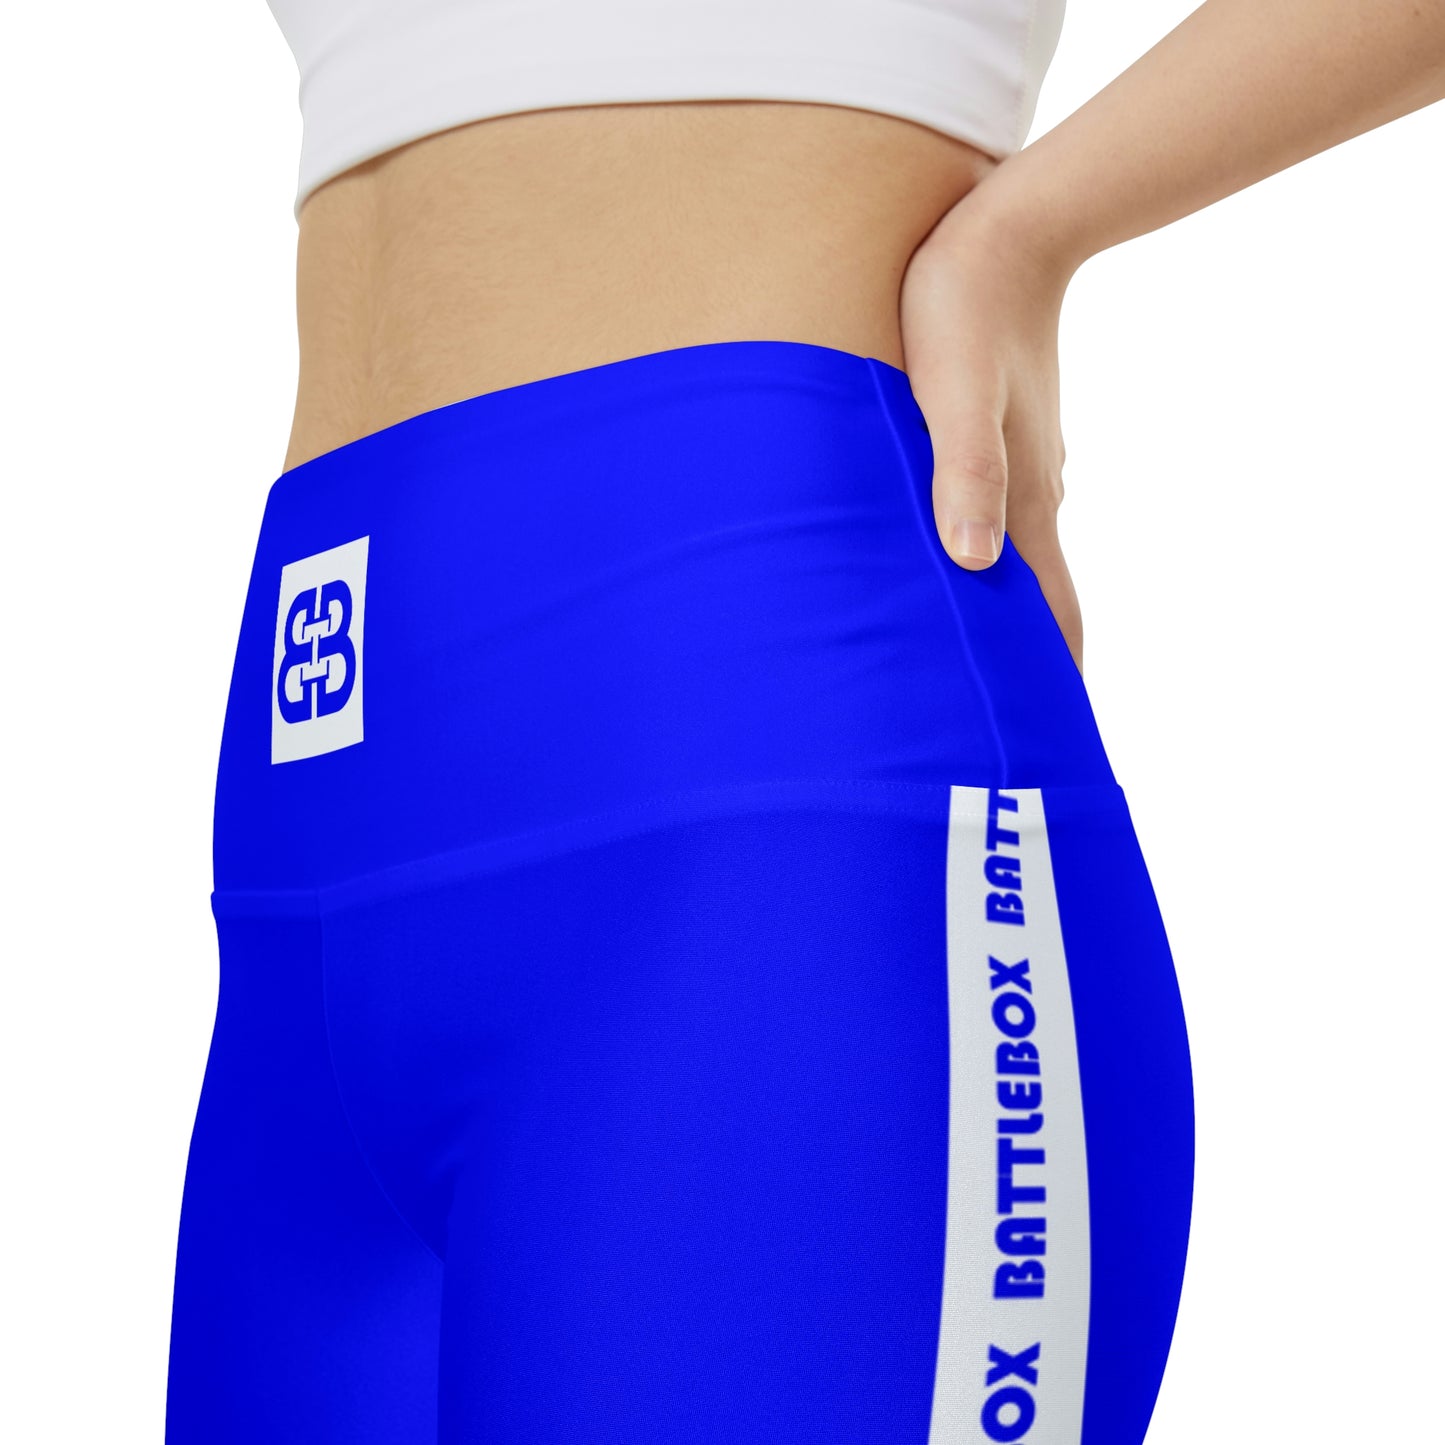 Battle Box Blue Women's Workout Shorts-T1